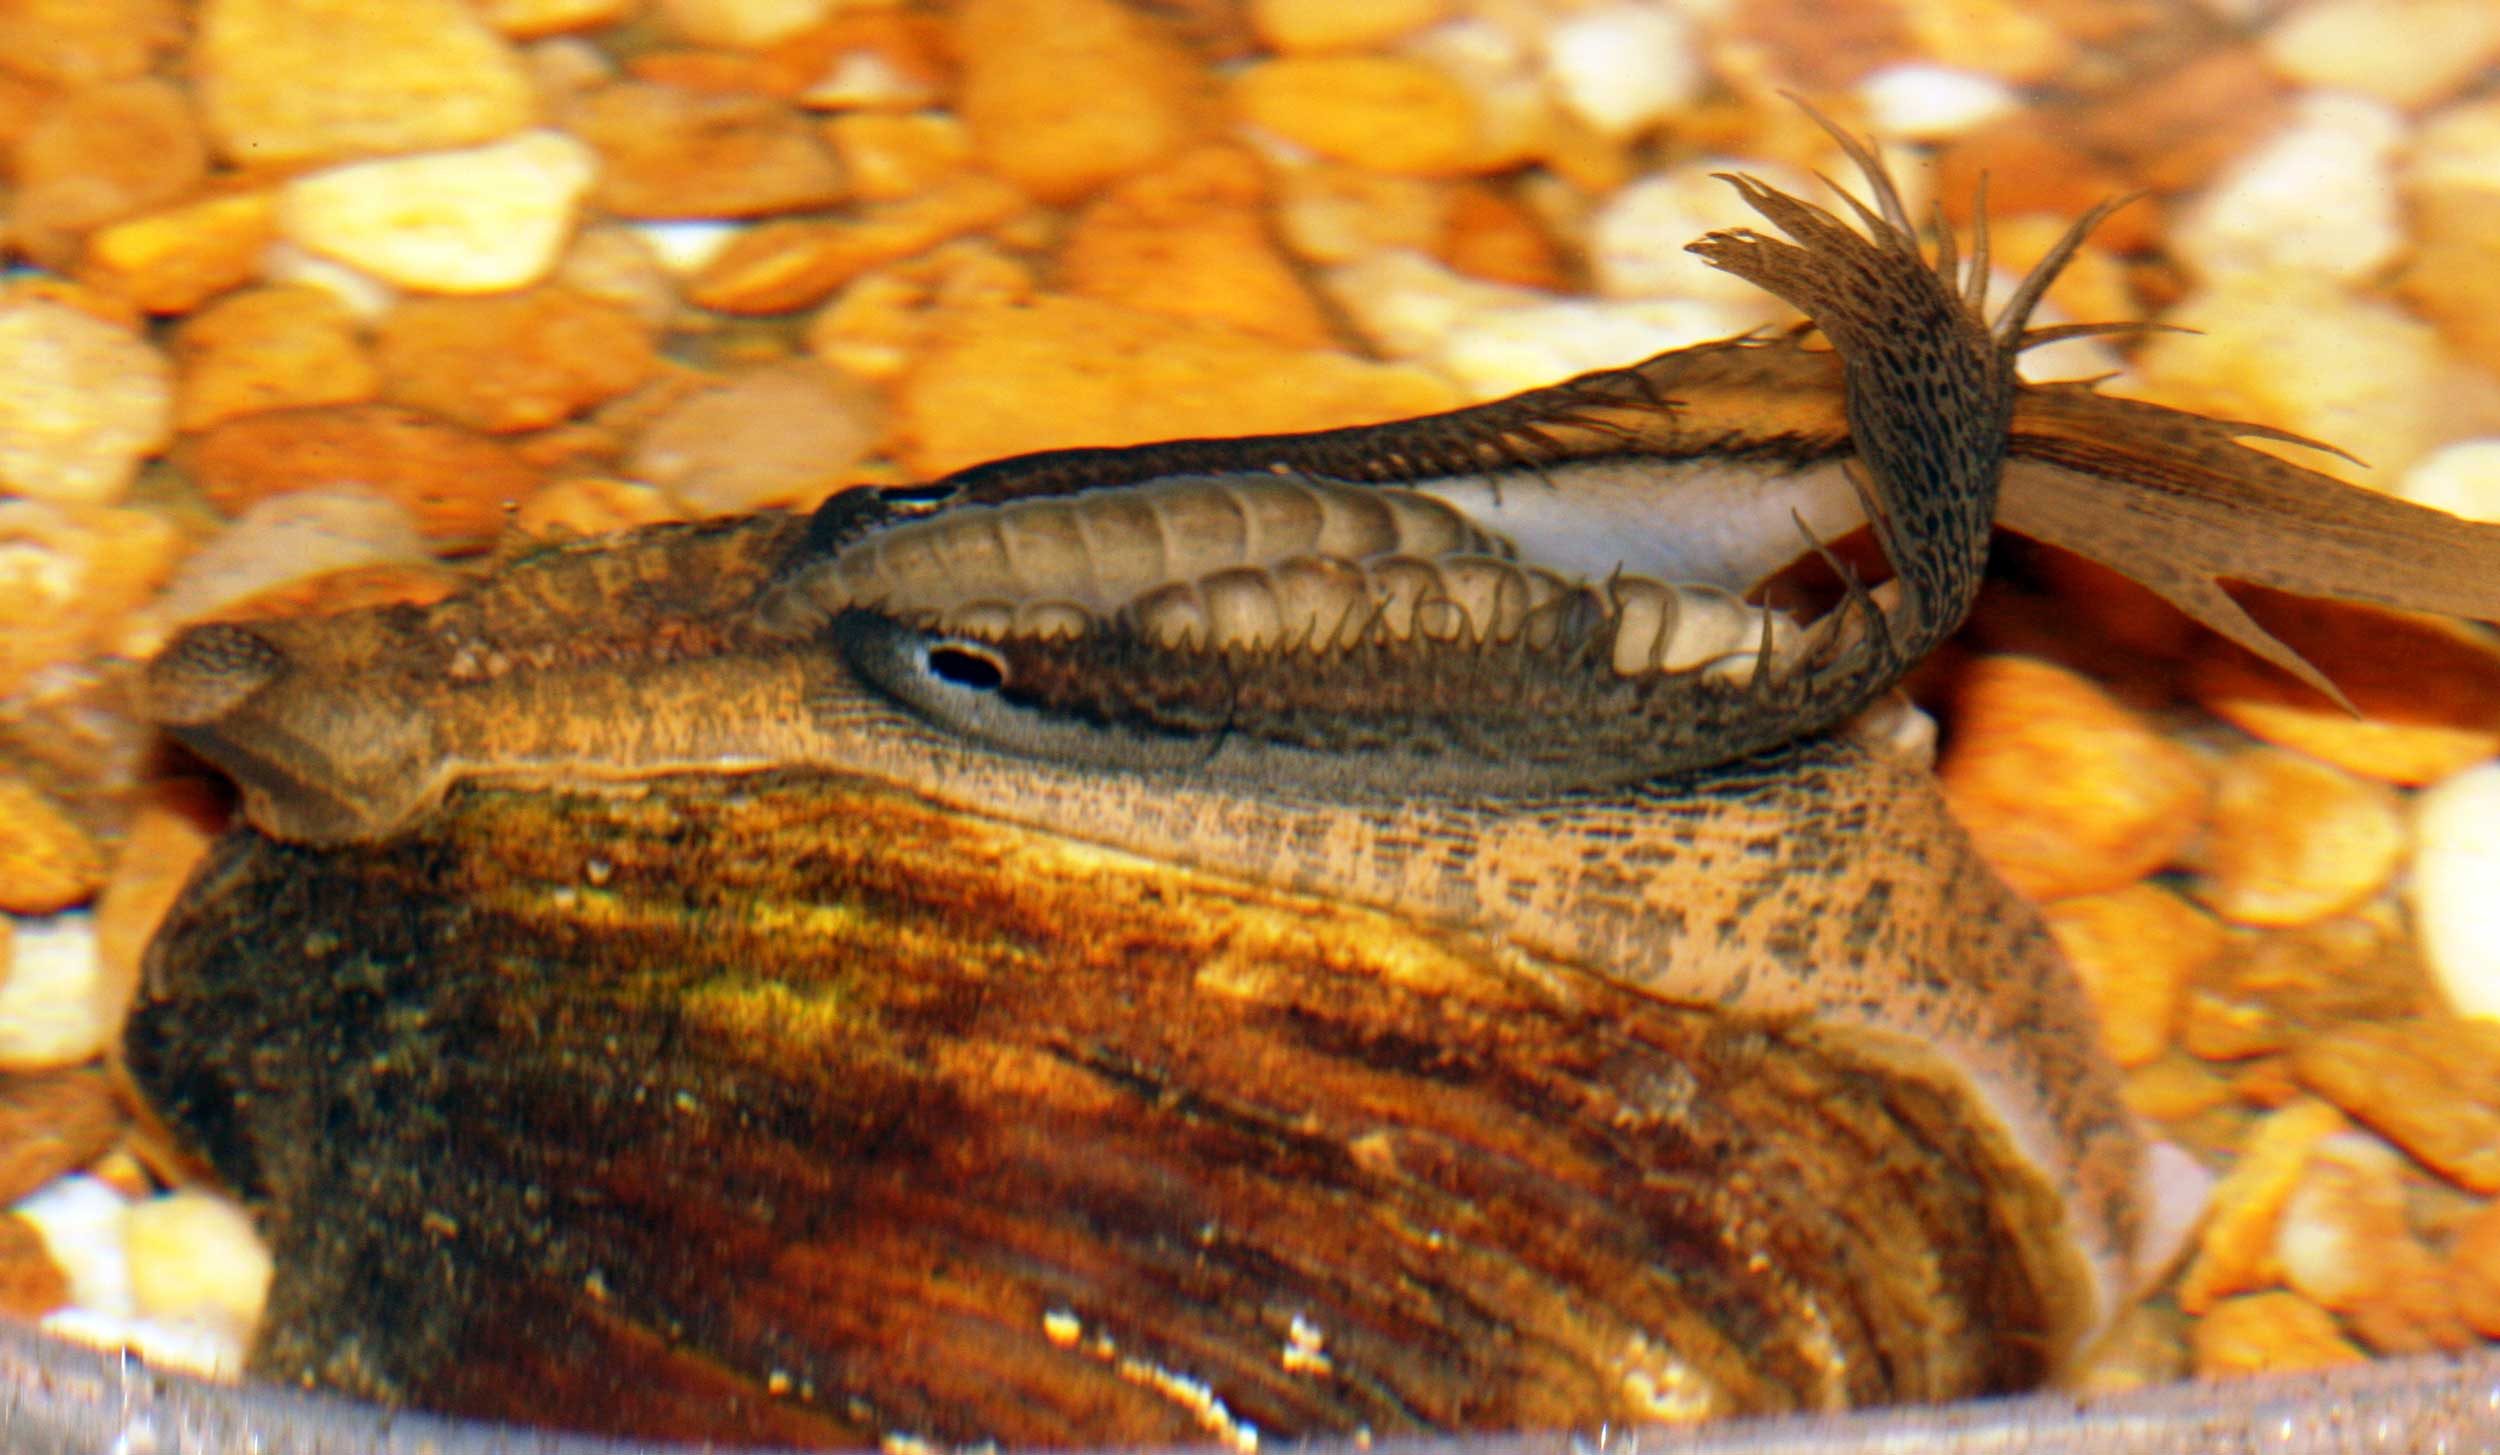 A fish-like mantle lure on a female Southern Pocketbook (Lampsilis ornata) freshwater mussel. Image credit: Paul Johnson, Alabama Aquatic Biodiversity Center